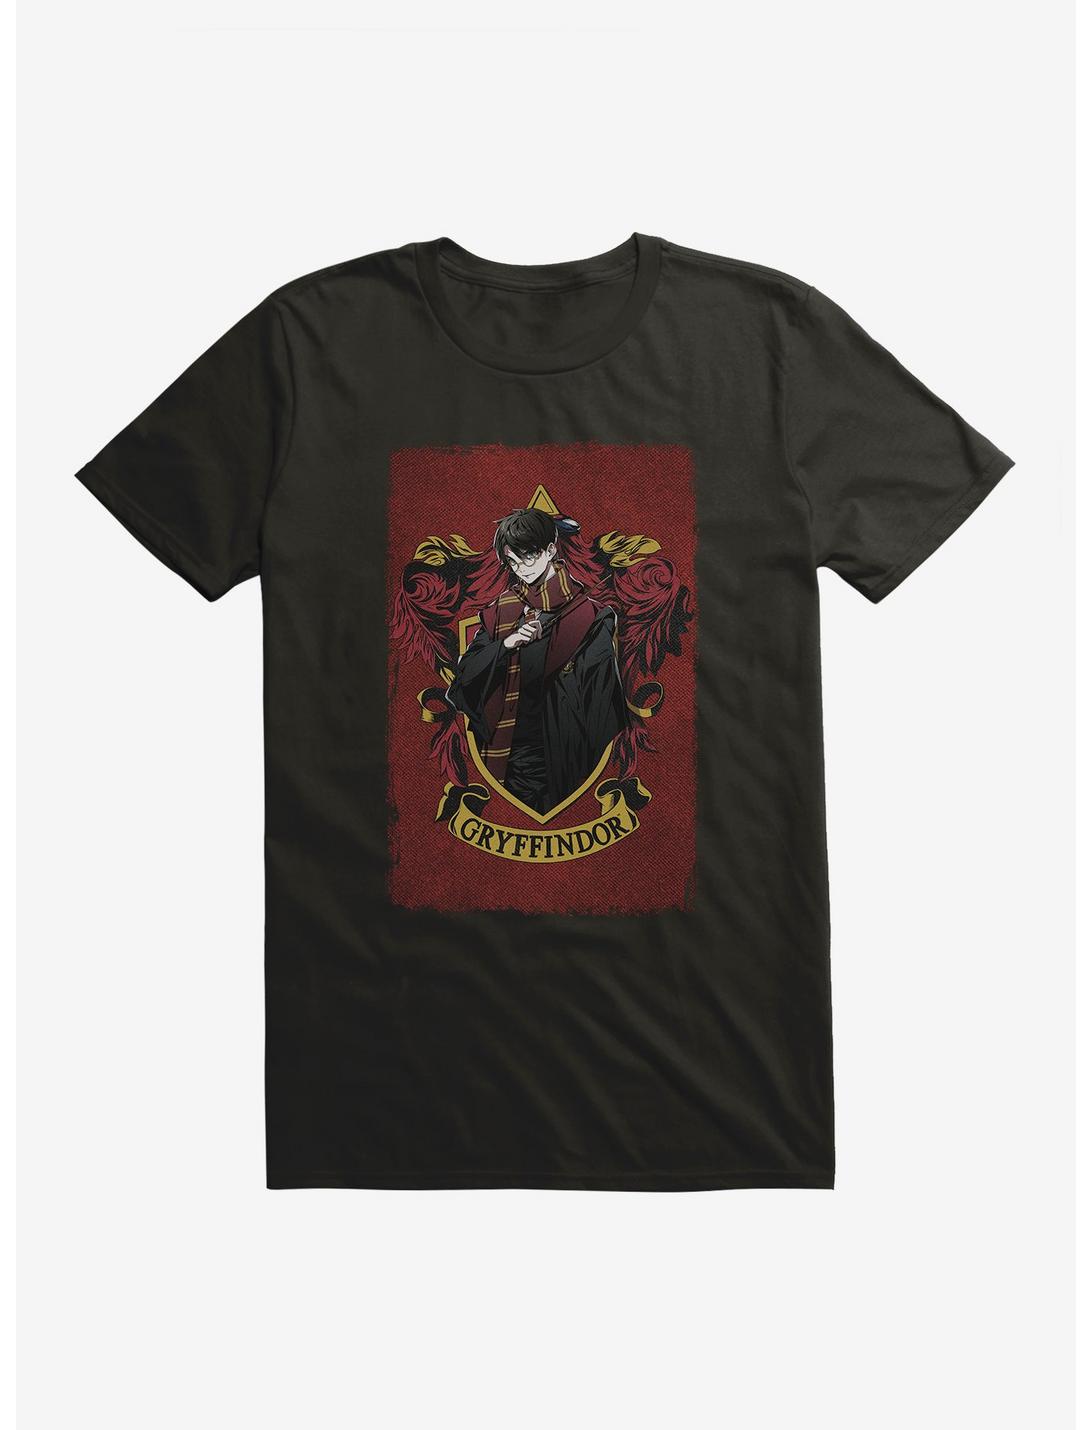 Harry Potter Harry Gryffindor Anime Style T-Shirt, , hi-res